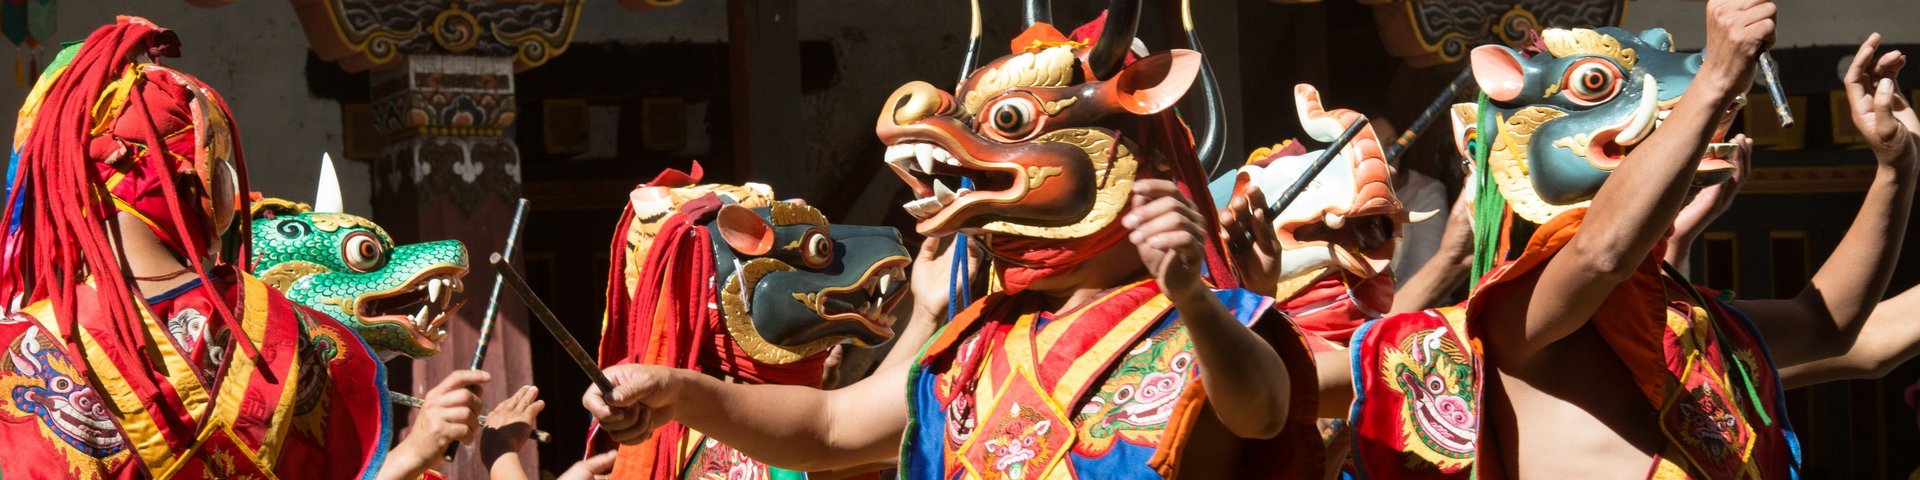 Farbenfrohes Klosterfest in Bhutan